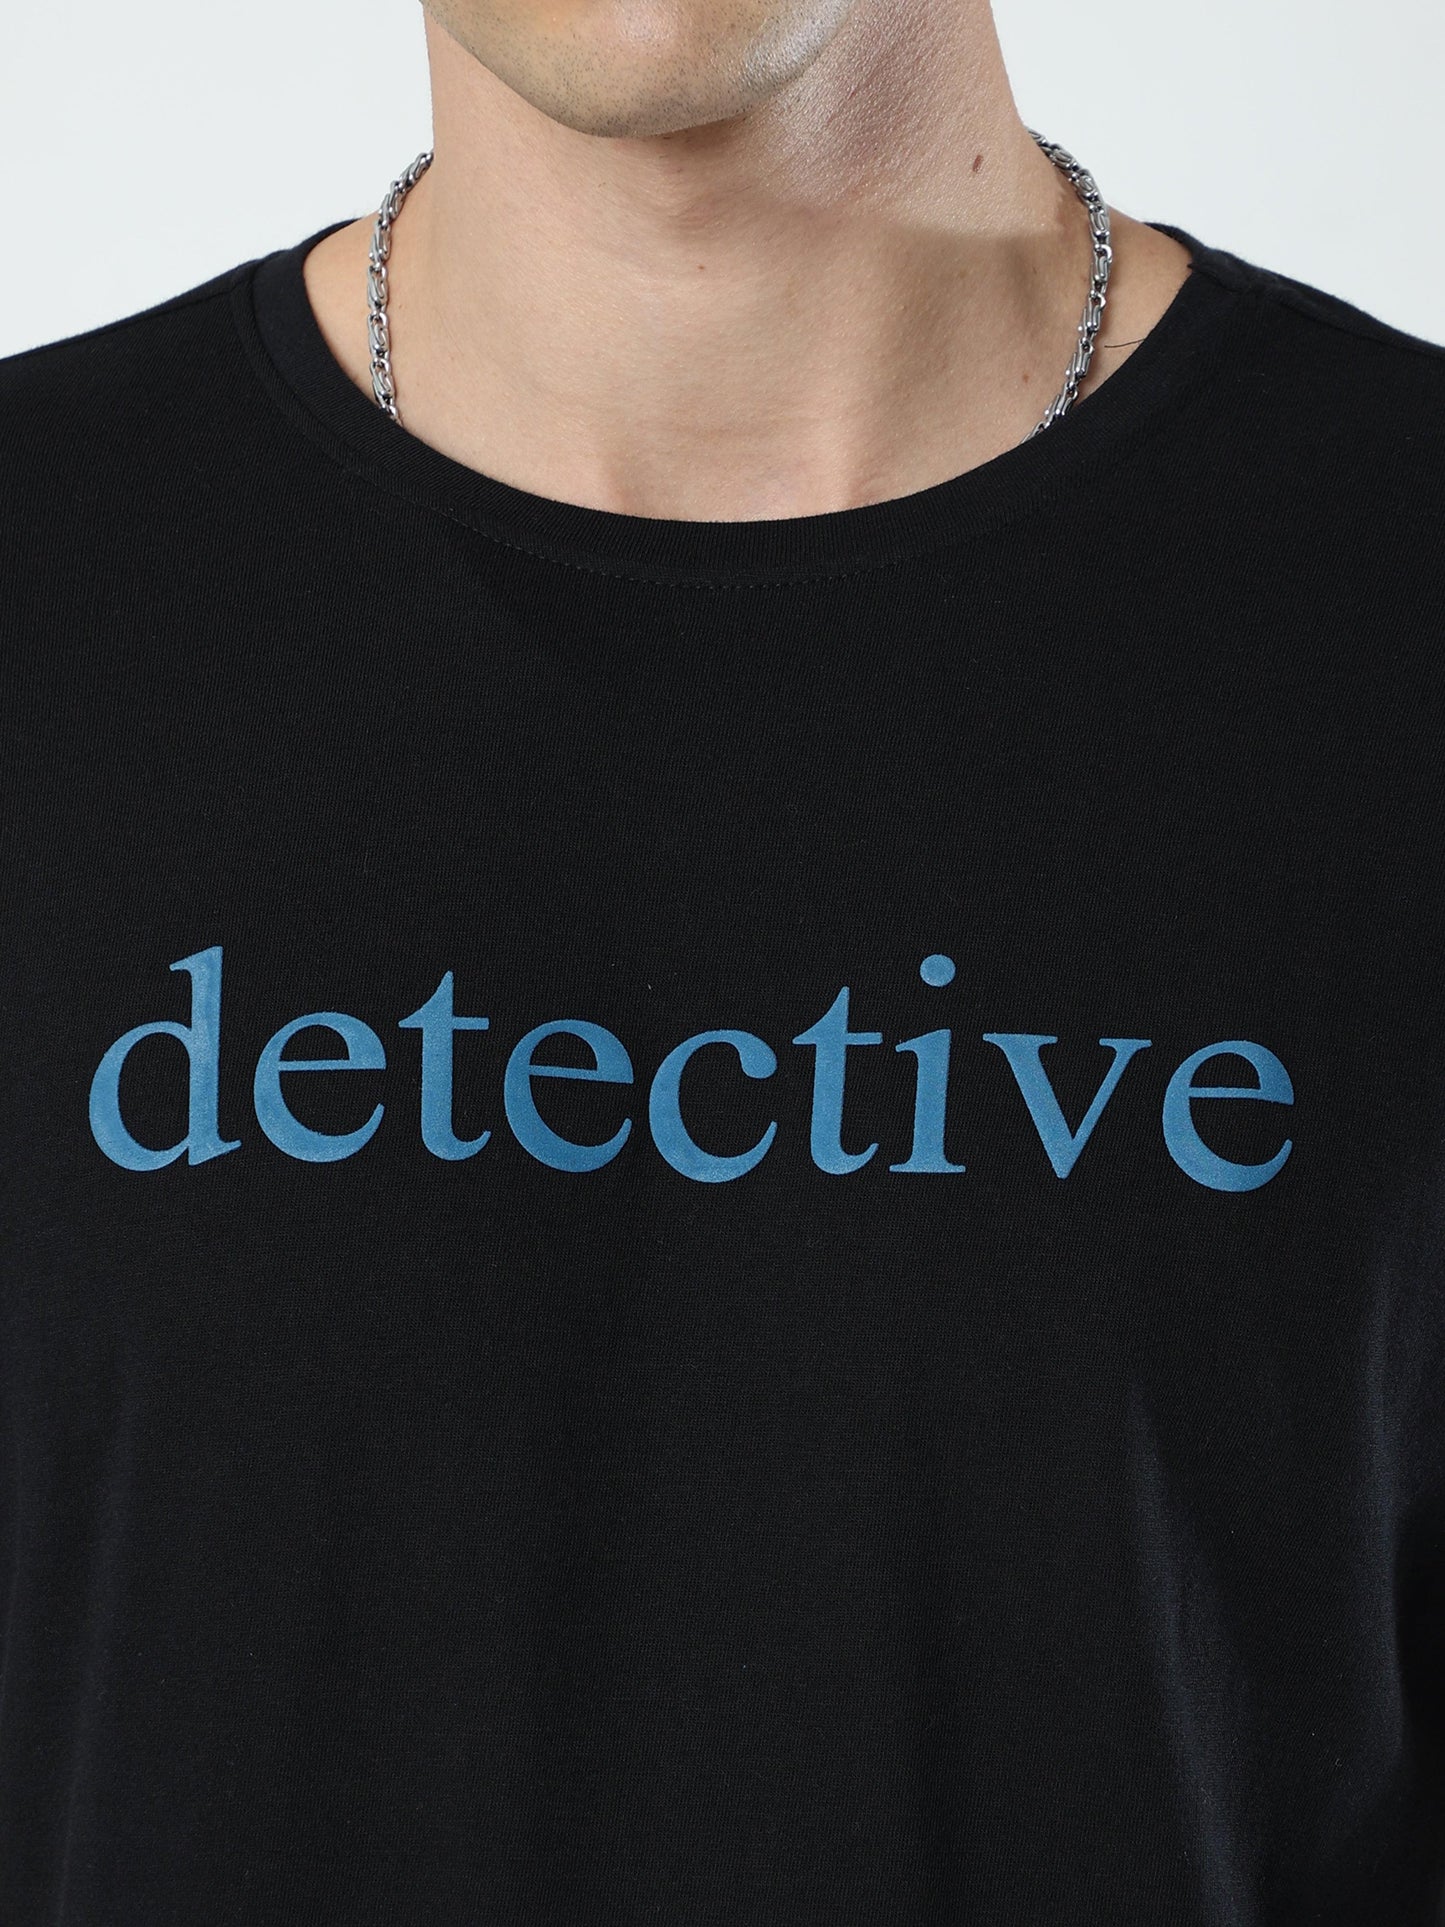 Men's casual T-Shirt - Detective Black